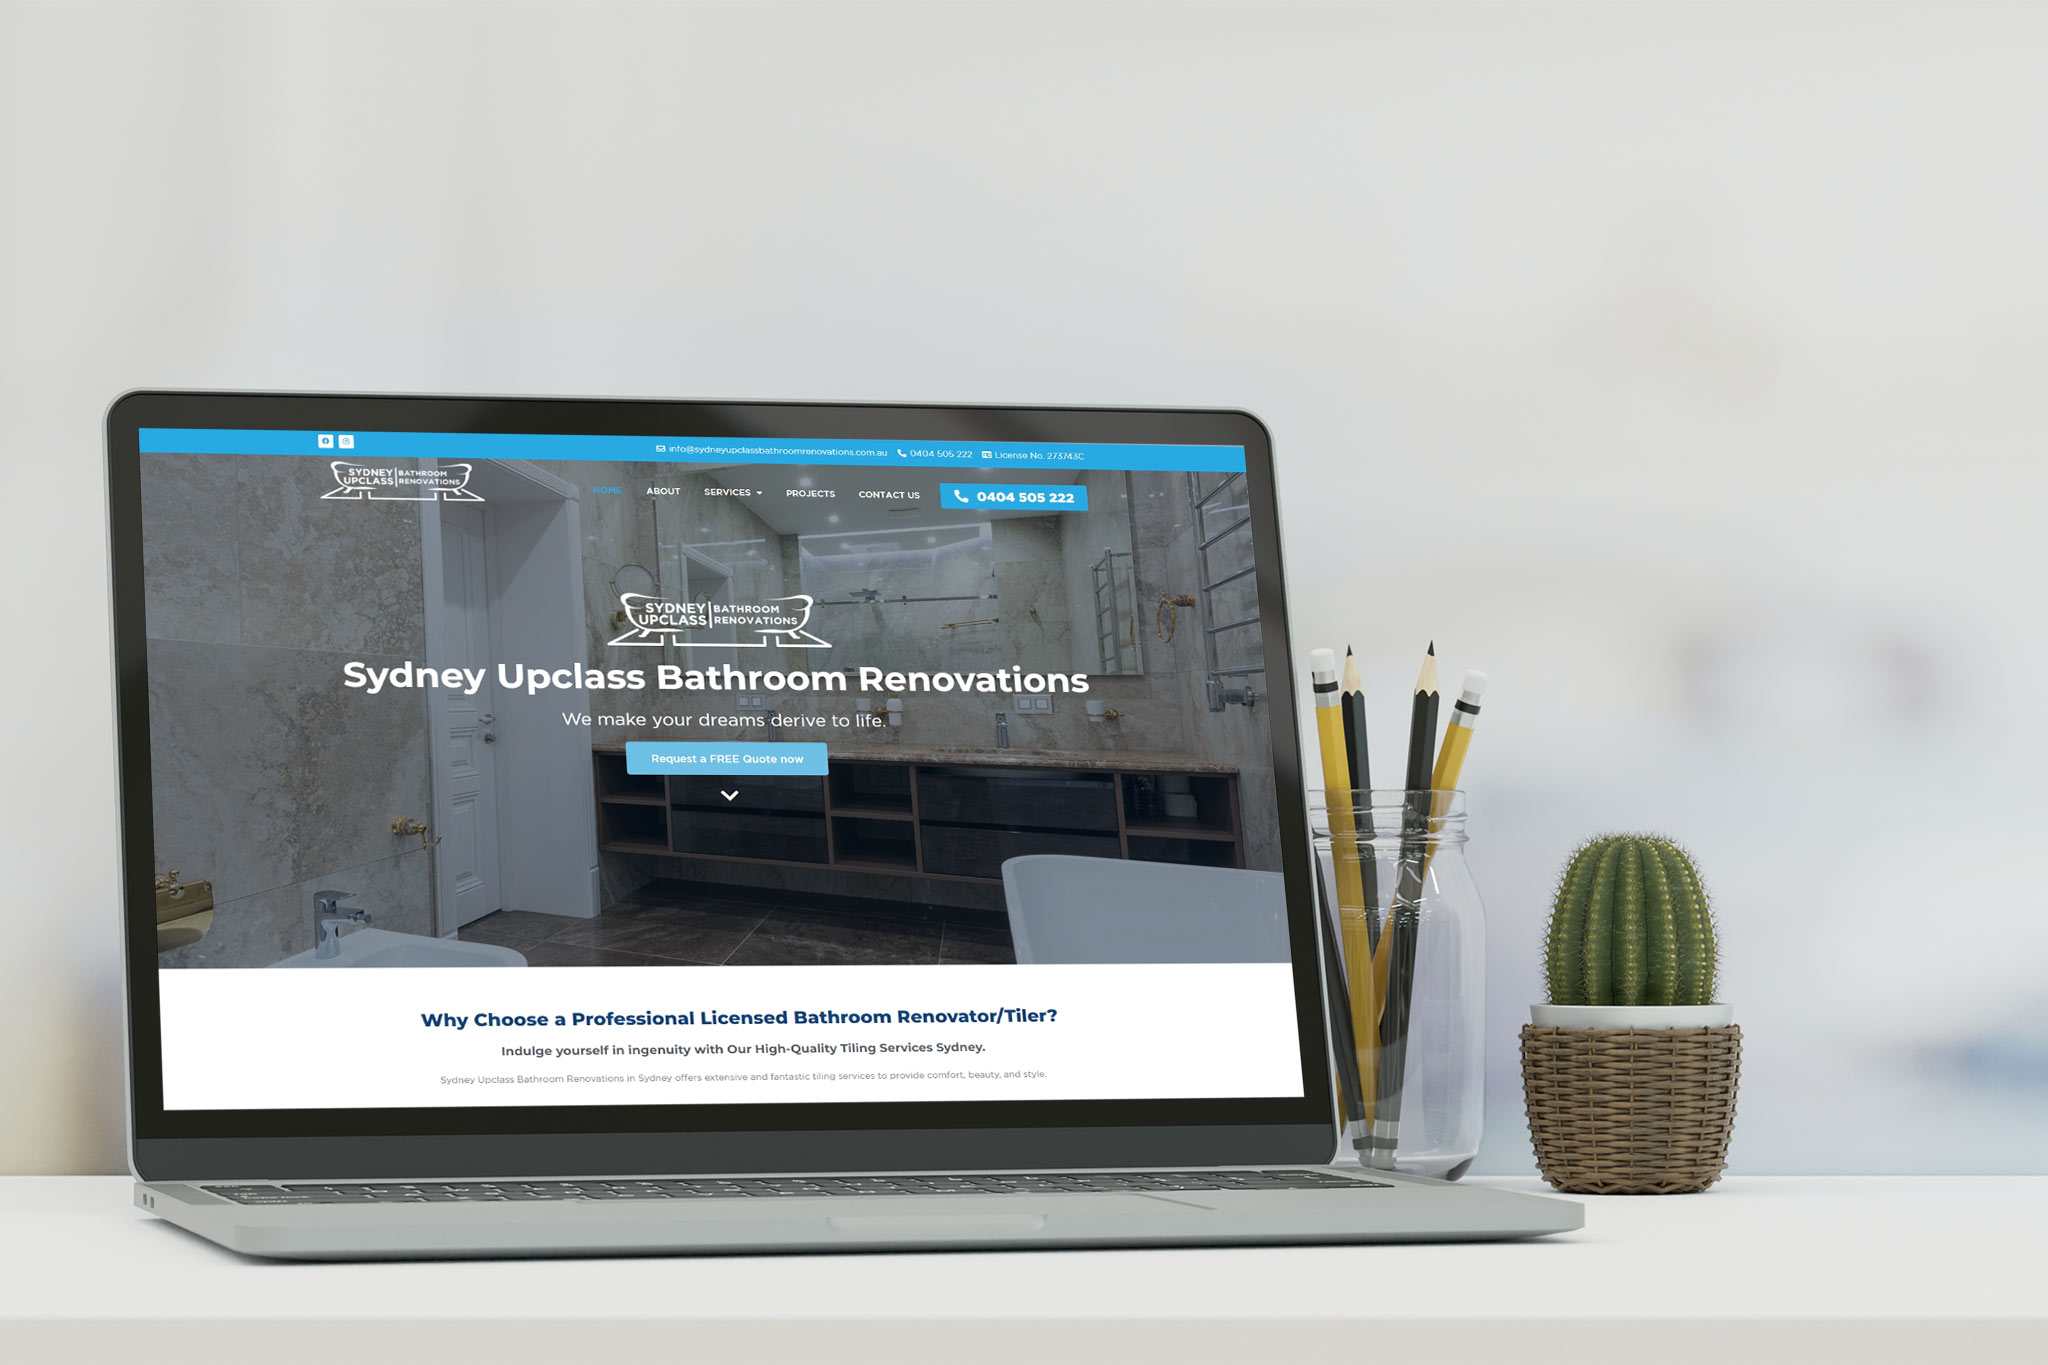 Sydney Upclass Bathroom Renovations Website - Digital Delicate